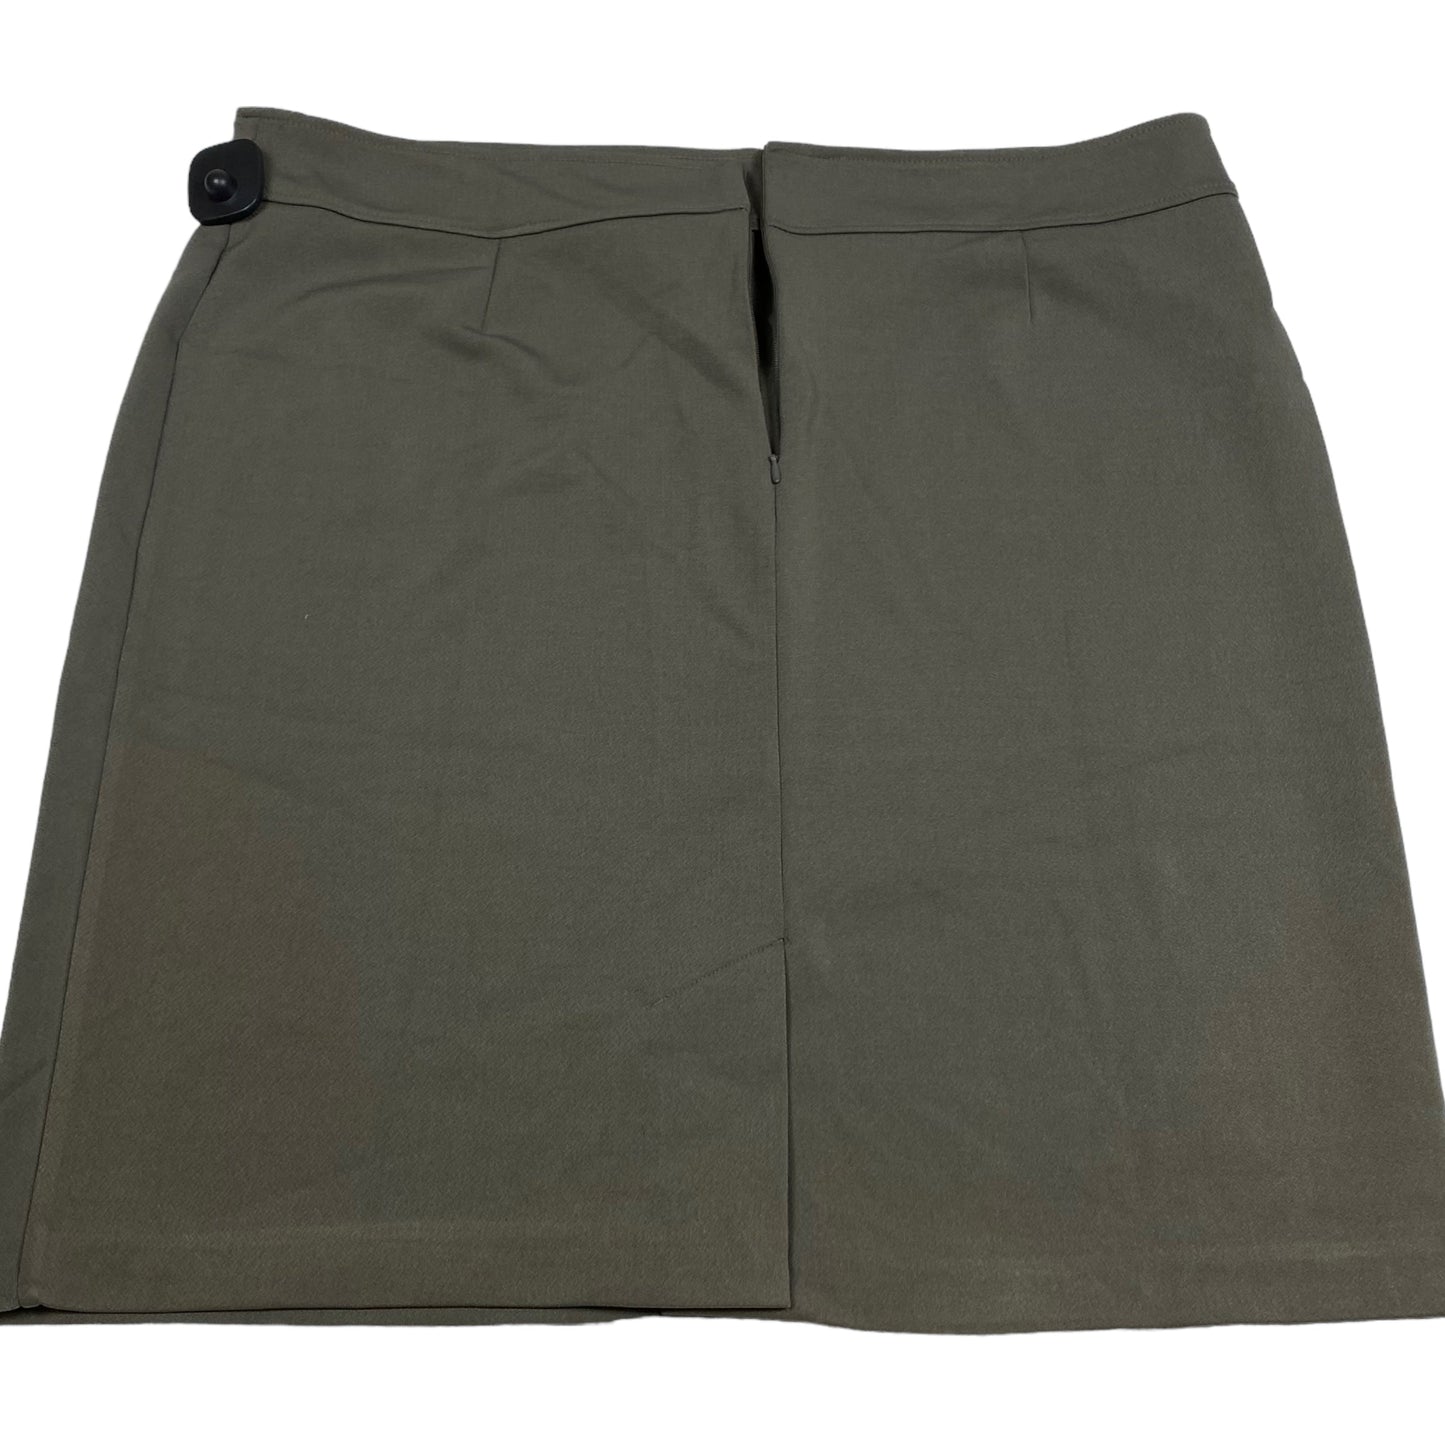 Skirt Mini & Short By H&m  Size: 1x